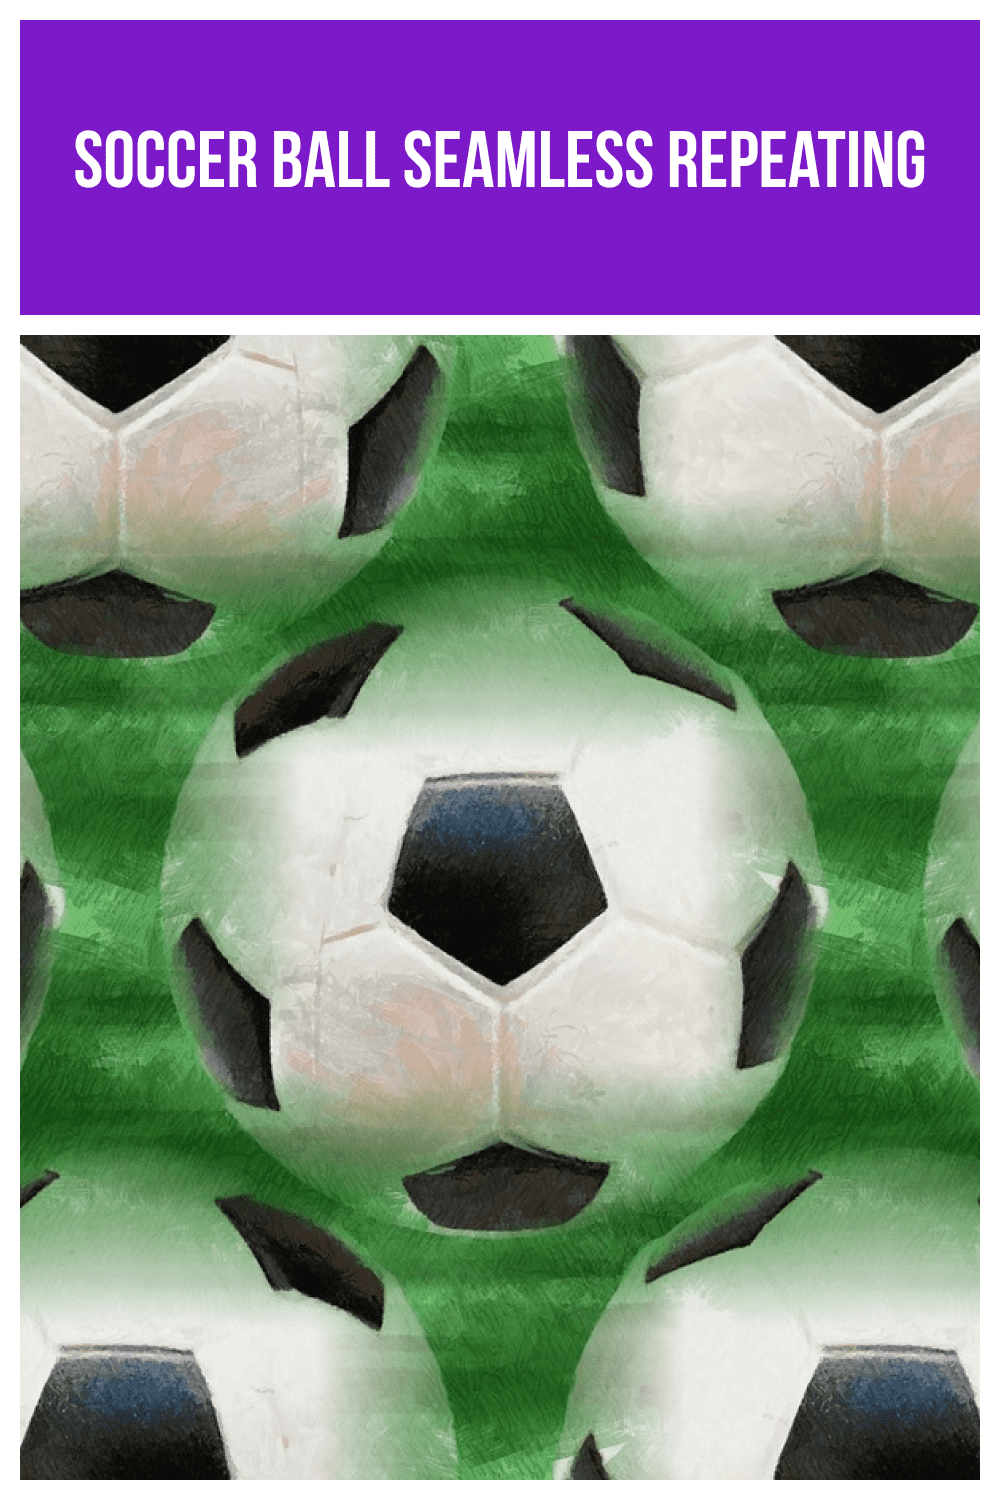 Soccer ball seamless repeating.